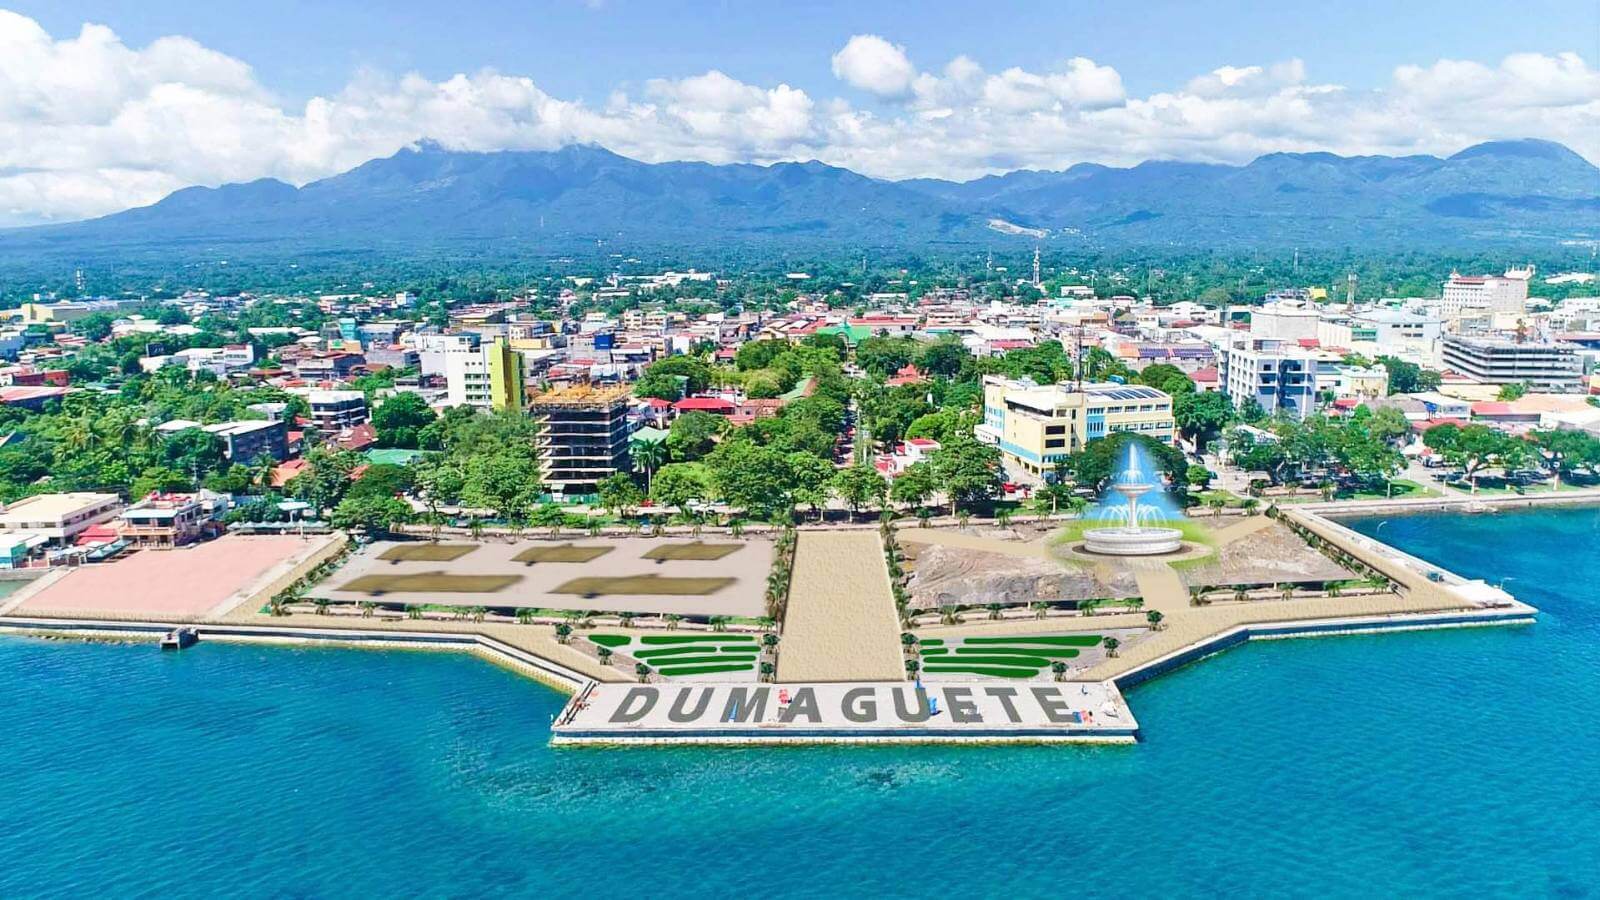 Dumaguete City in Negros Oriental